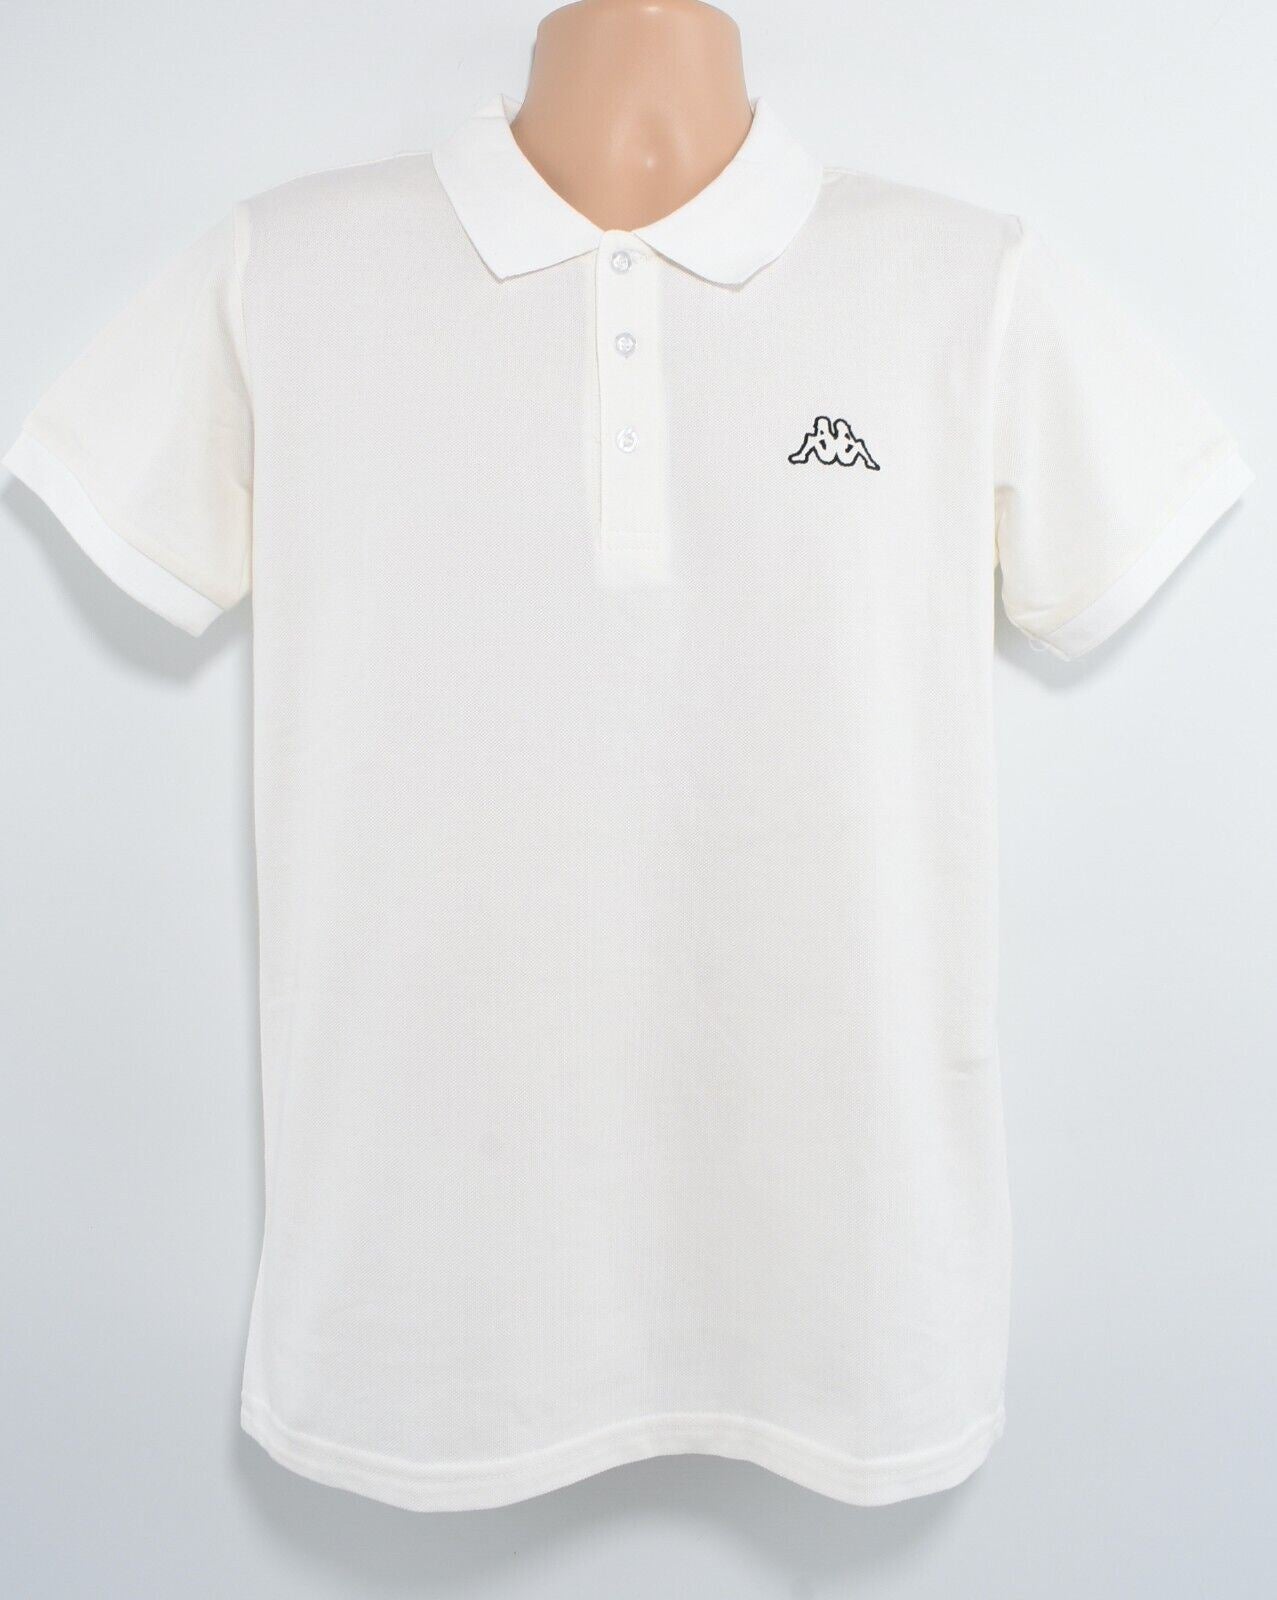 KAPPA Mens Short Sleeve Polo Shirt, Cotton Pique, Ivory White, size SMALL